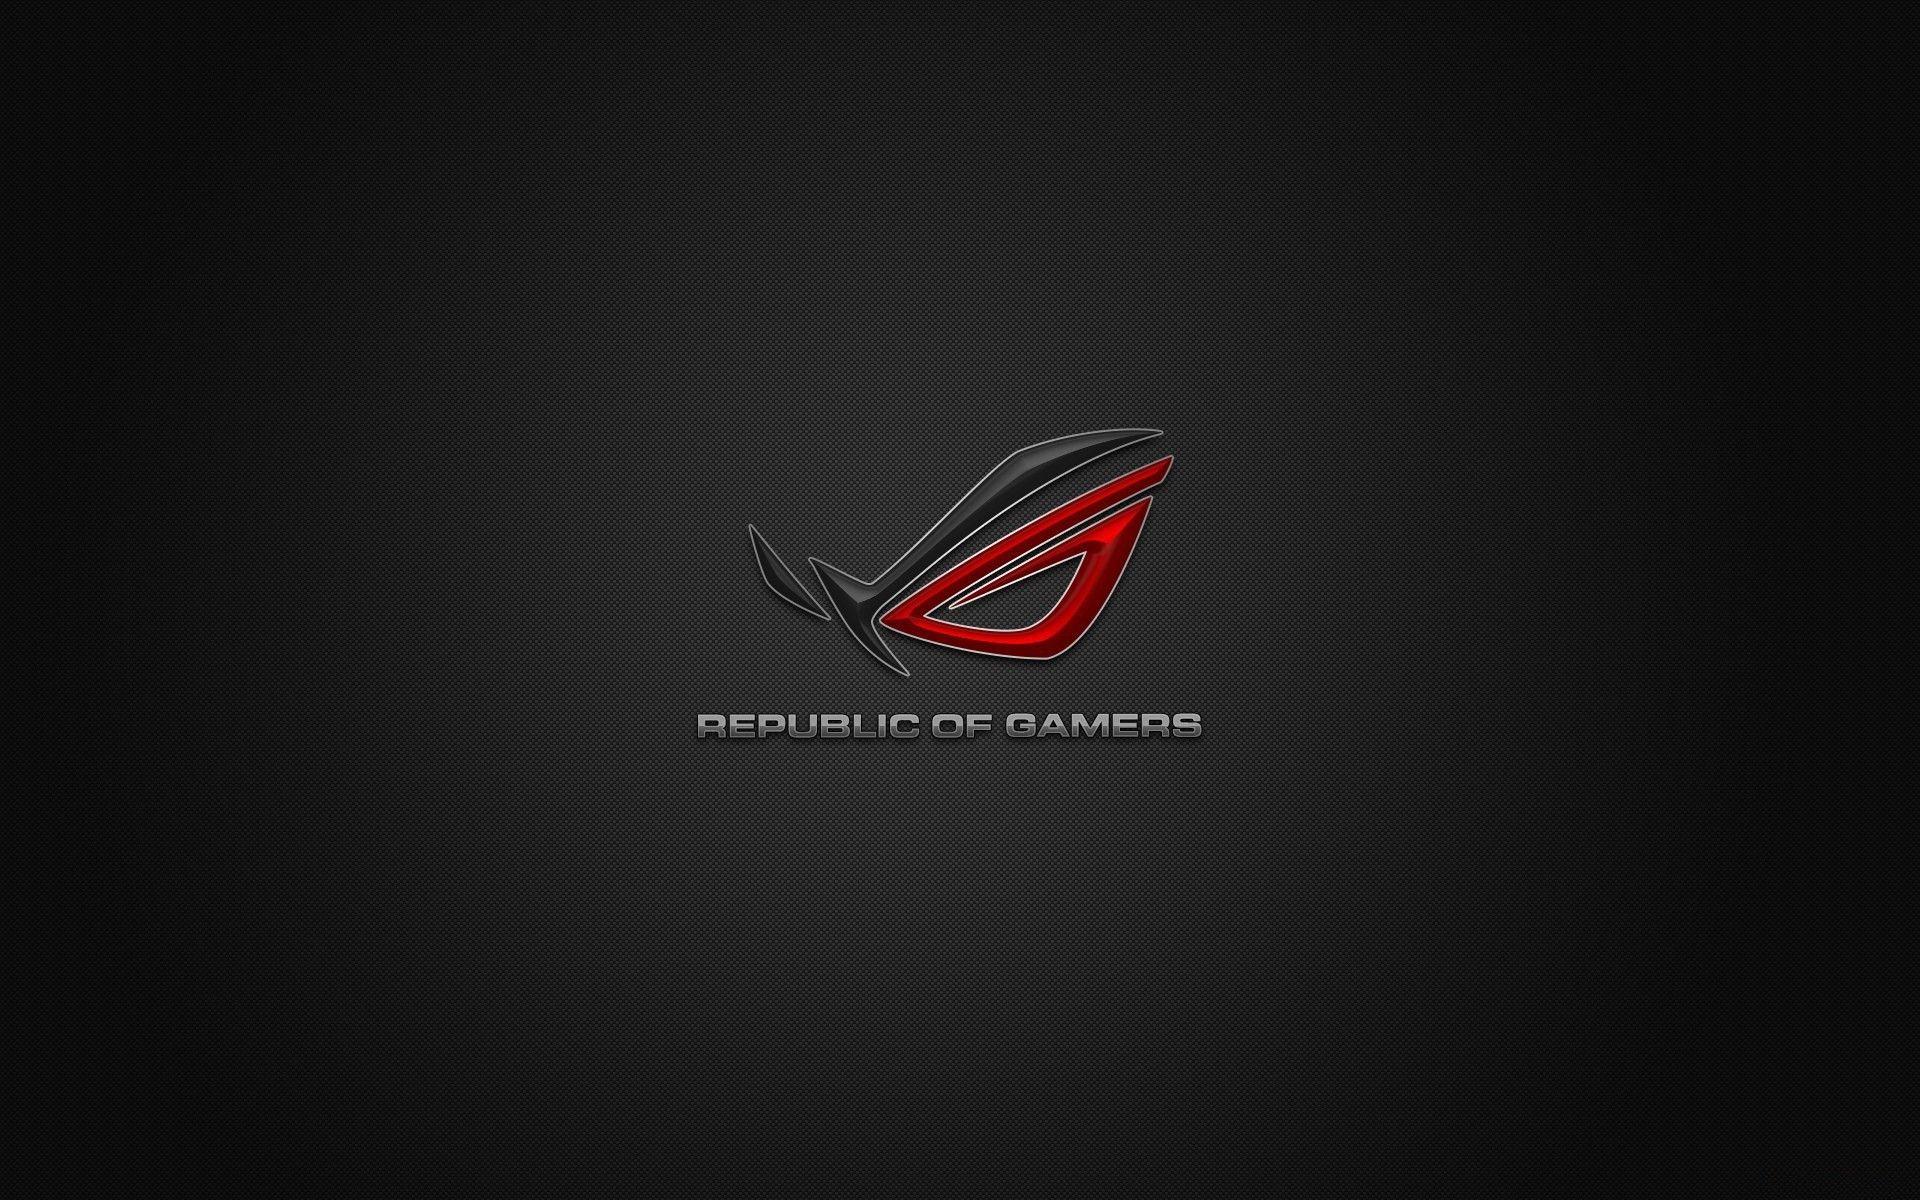 Asus logos republic of gamers windows logo wallpaper